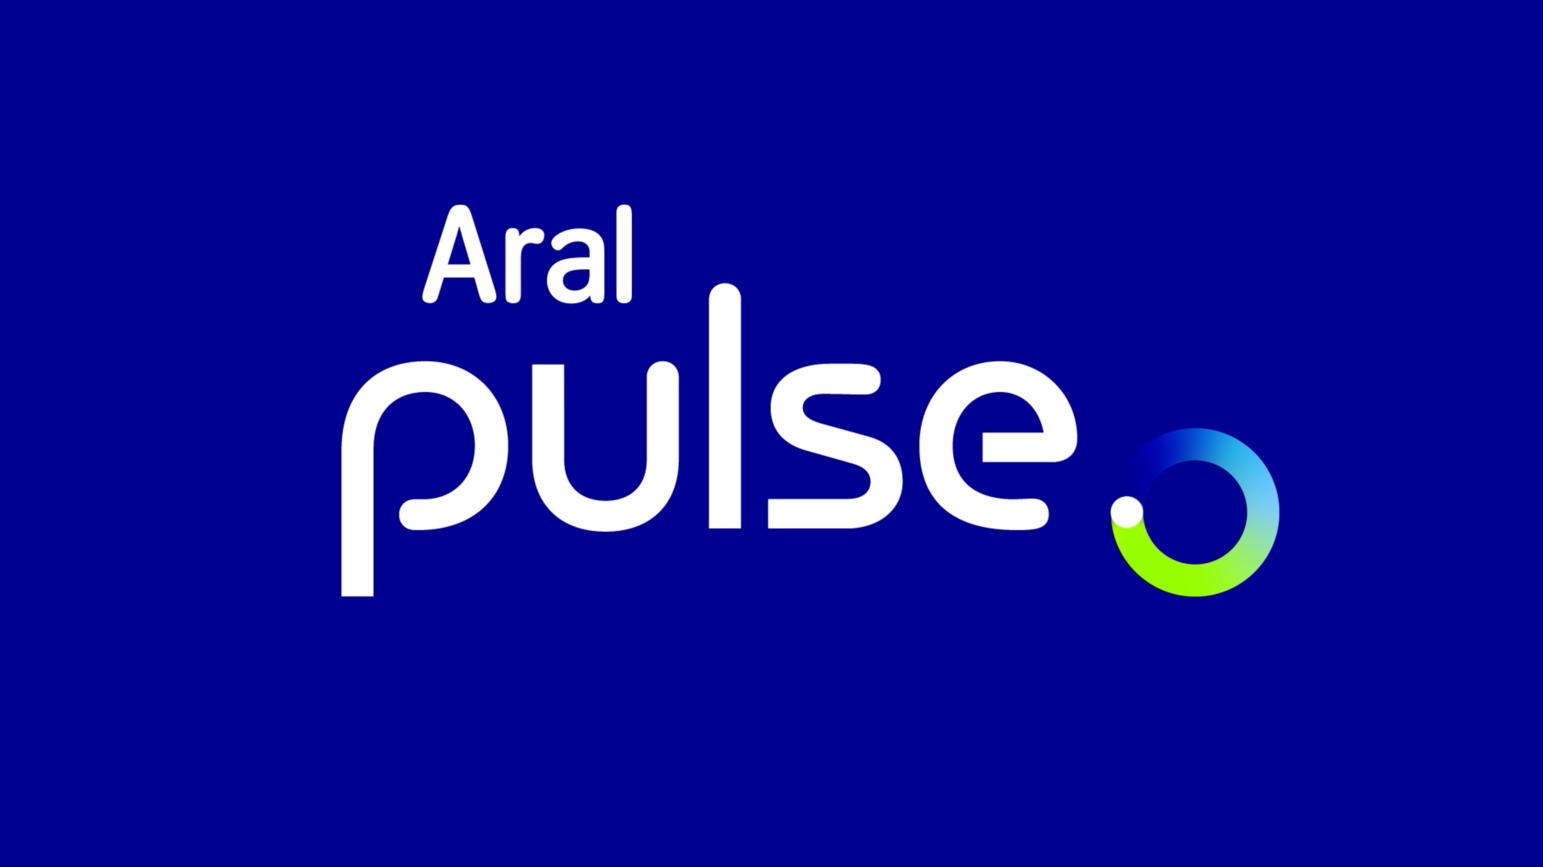 Aral Pulse